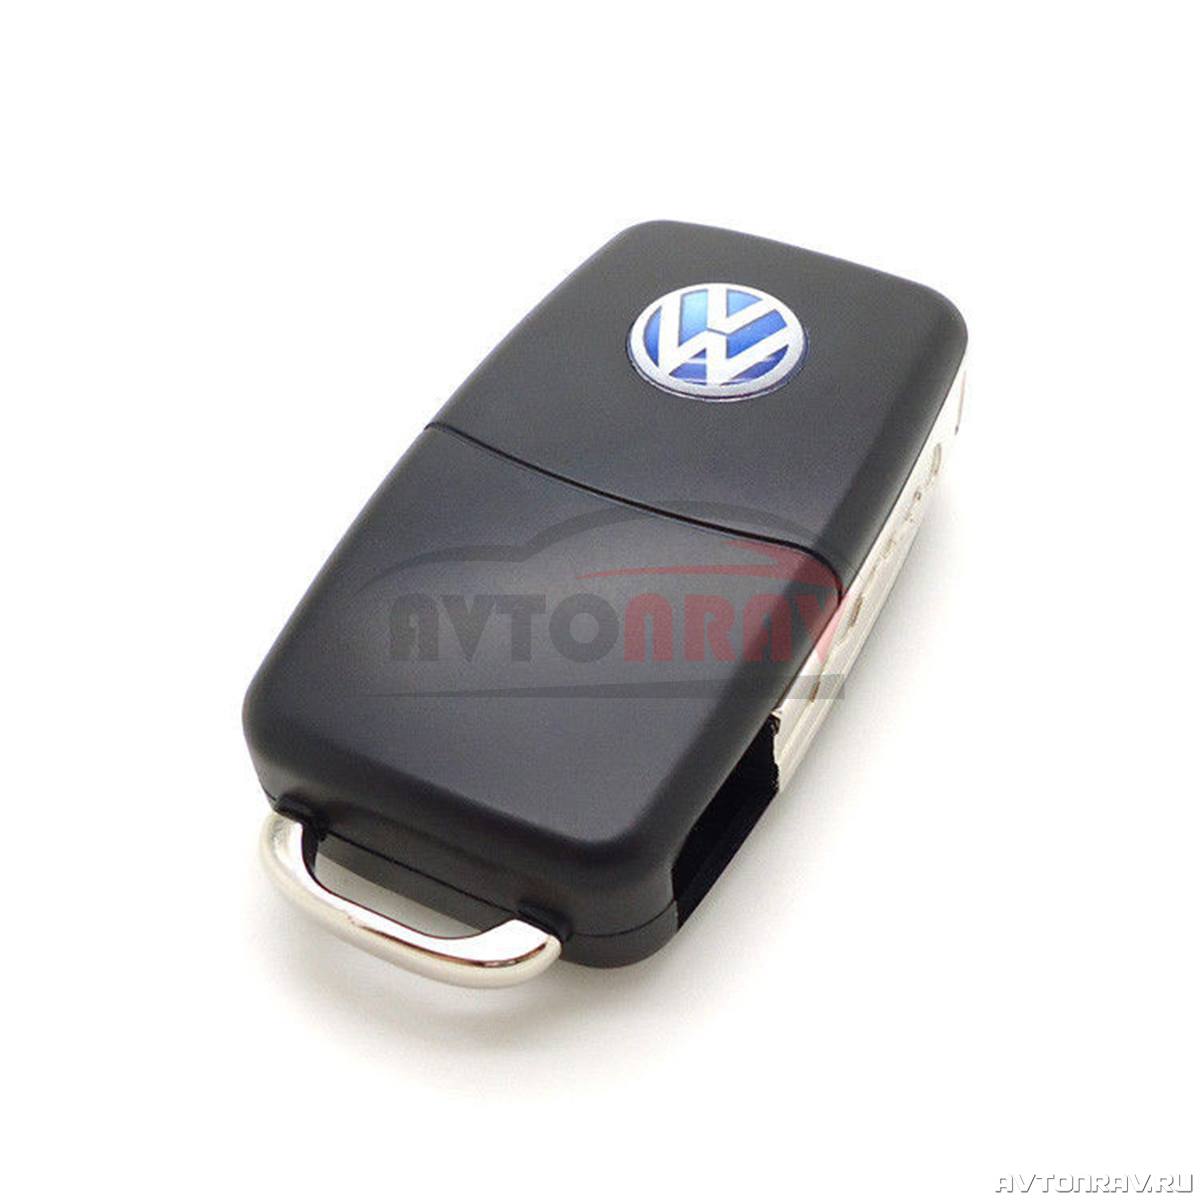 Купить флешку в машину. Флешка Volkswagen USB. Ключи Фольксваген Крафтер. USB 3.0 флешка ключ. USB флешку на Volkswagen 16 ГБ.